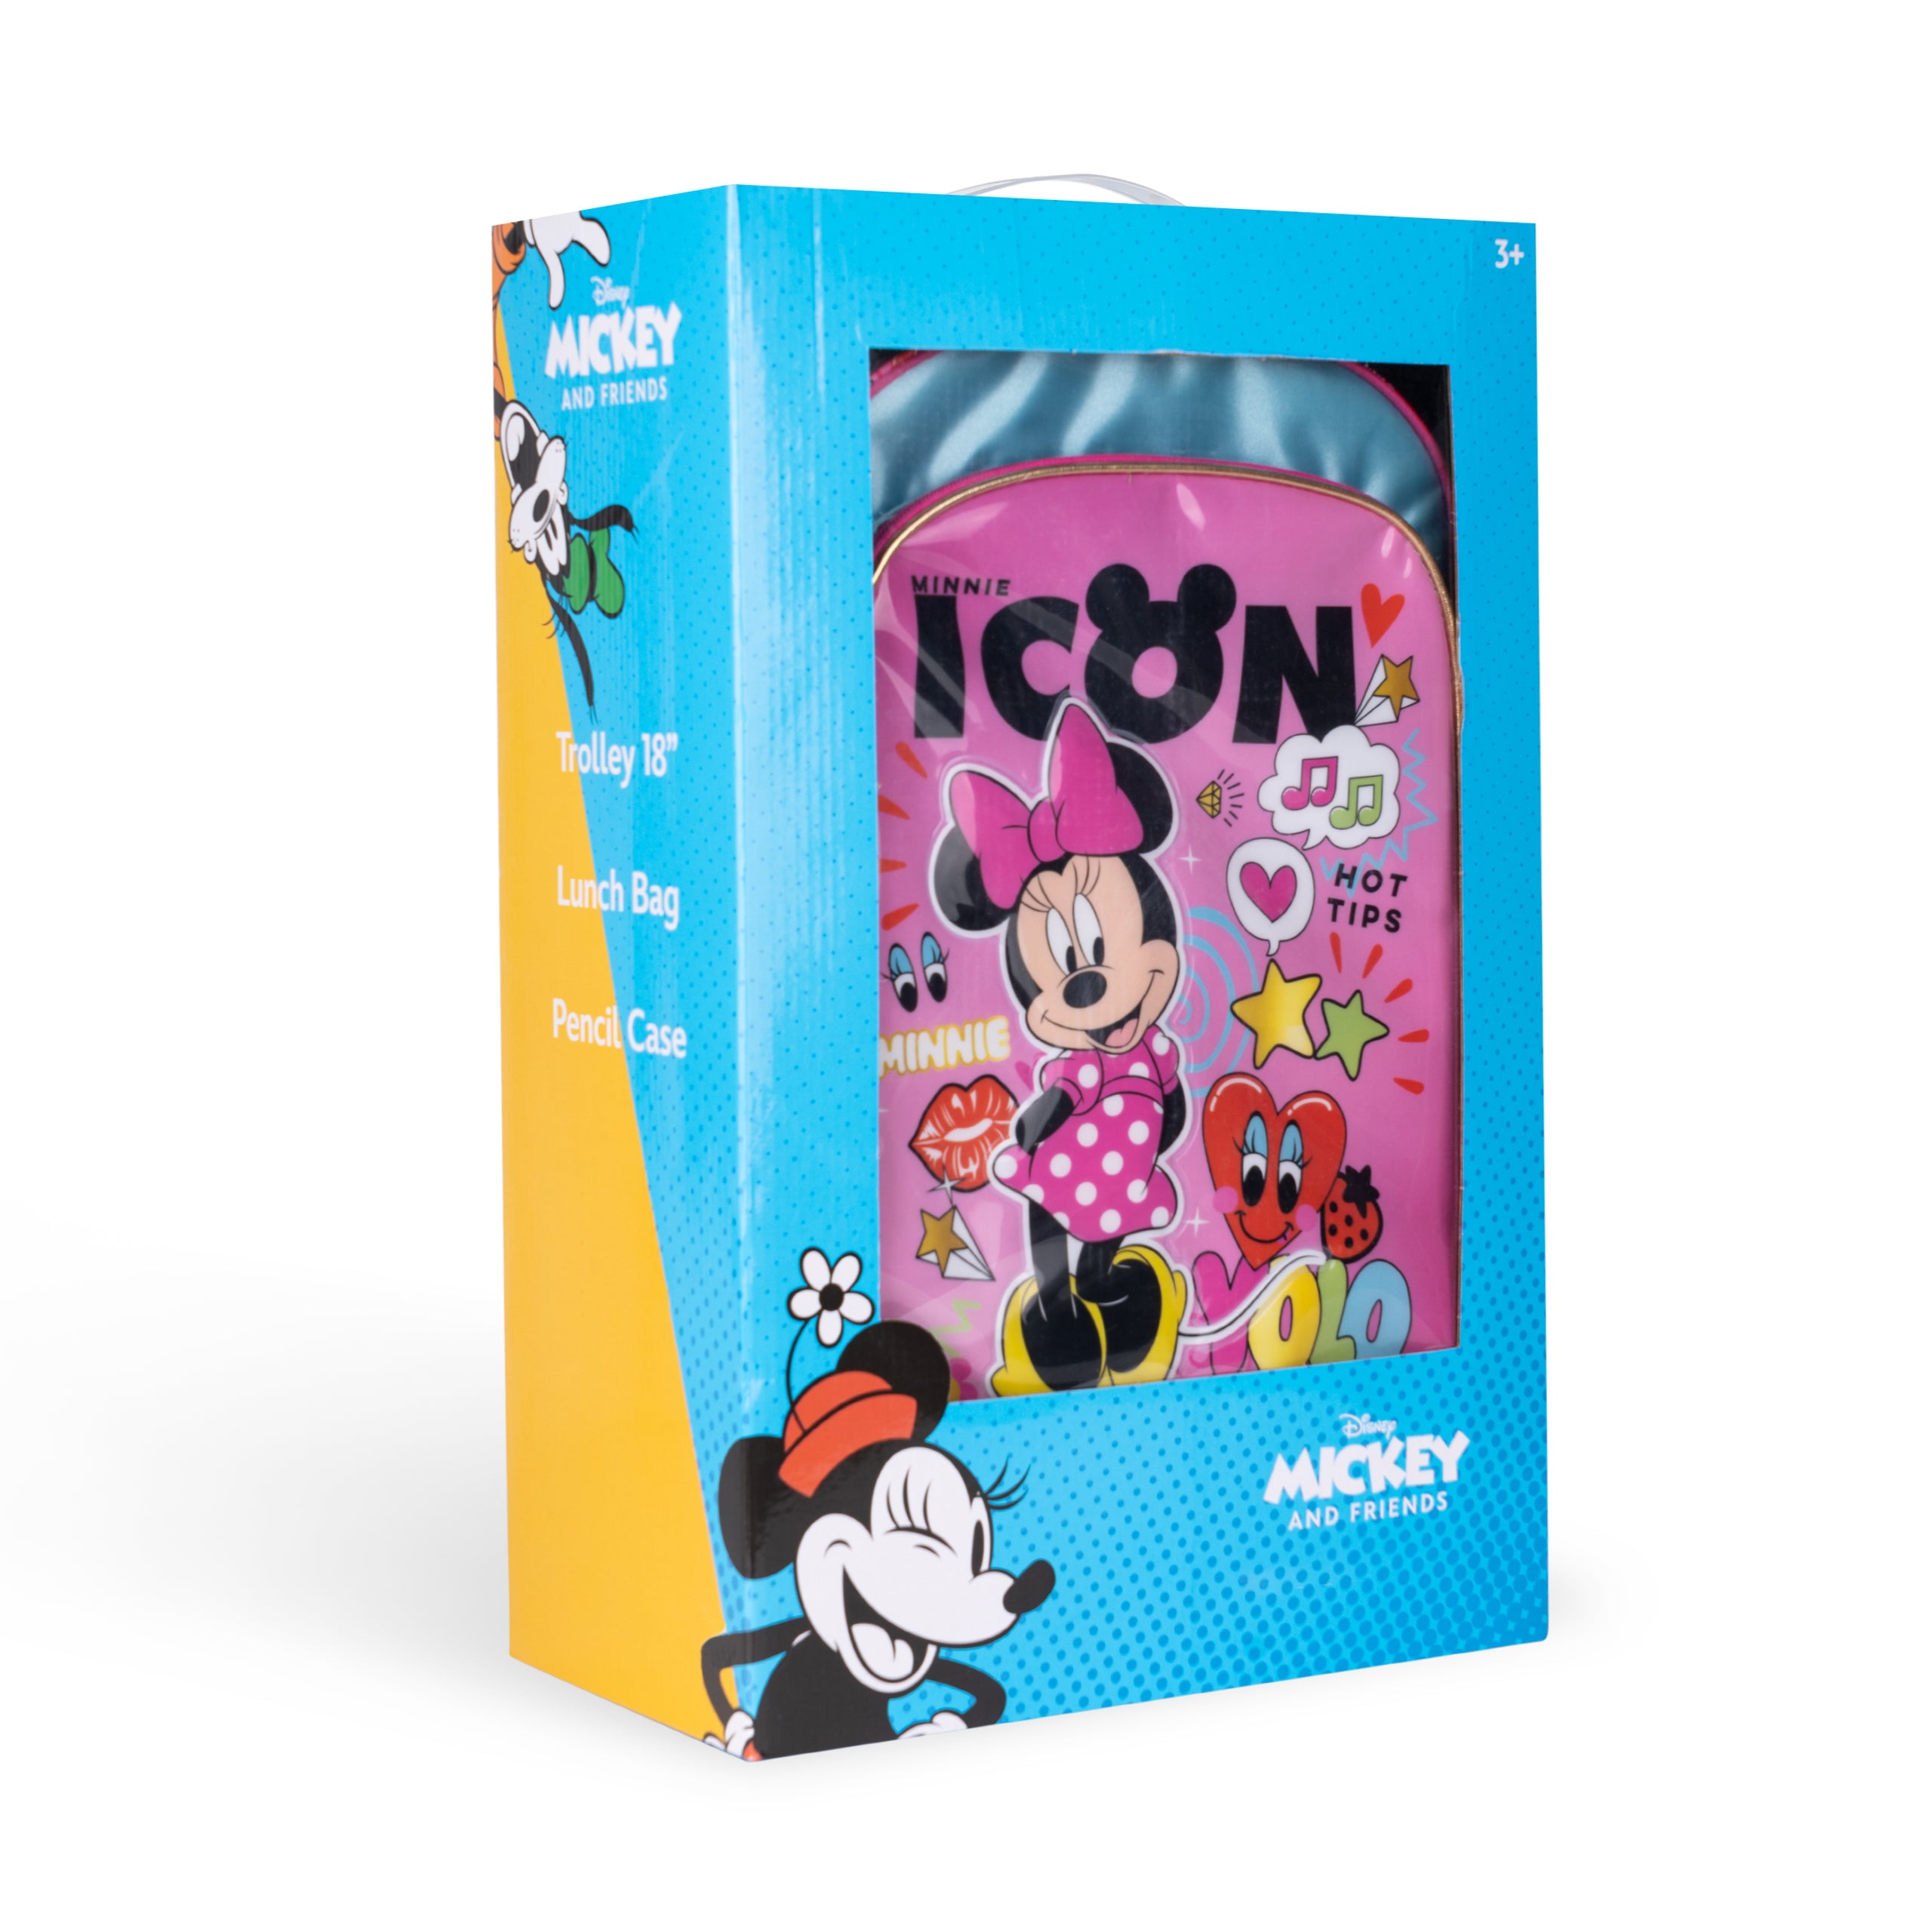 Disney Minnie Mouse Minnie Icon Issue 3in1 Trolley Box set 18"